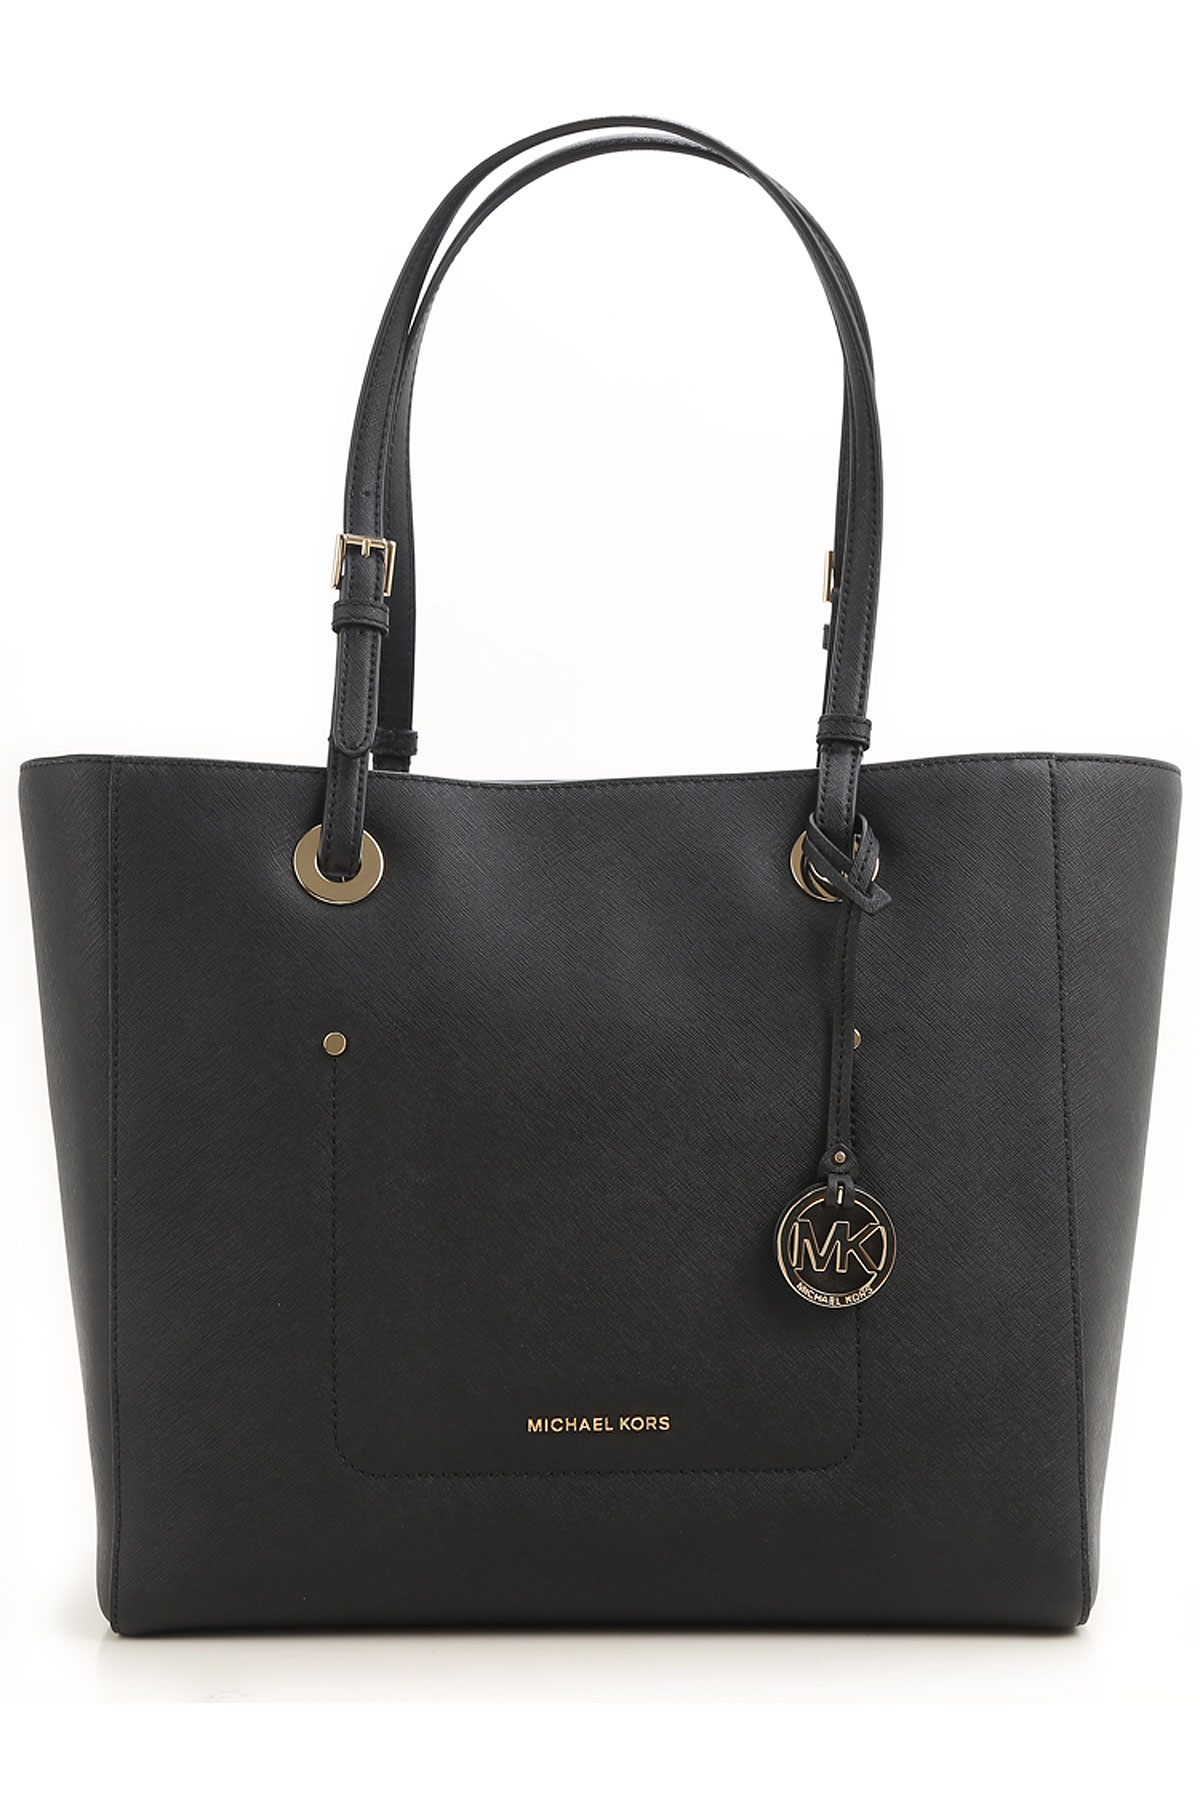 Handbags Michael Kors, Style code: 30s7gwat4l-black-A100